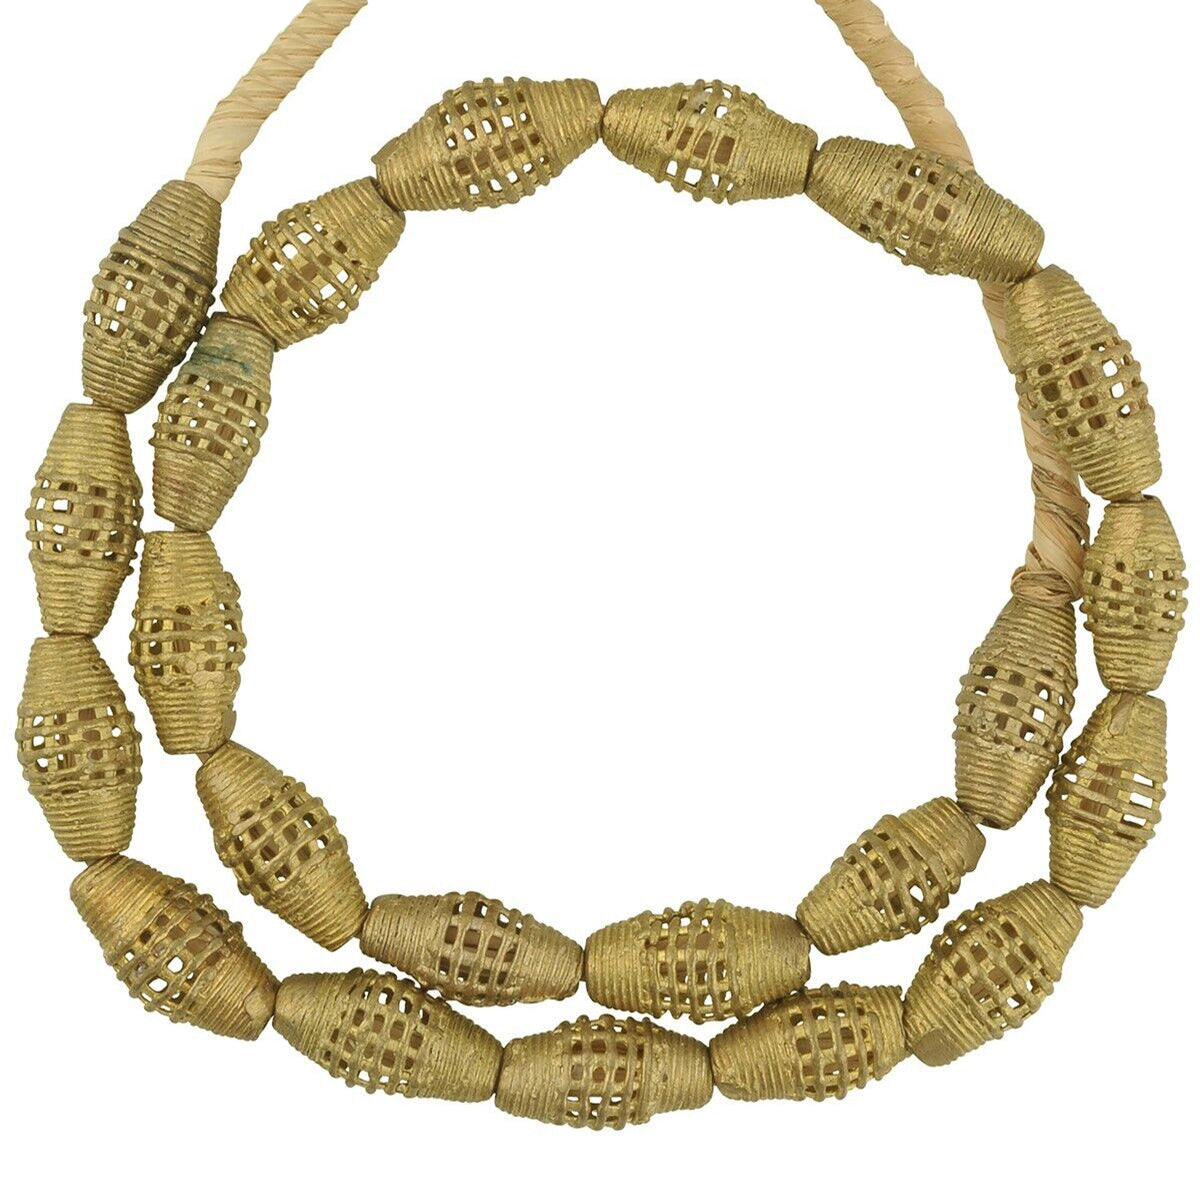 Ghana pearl necklace and bracelet set by artisanat-afro - Jewel Sets -  Afrikrea